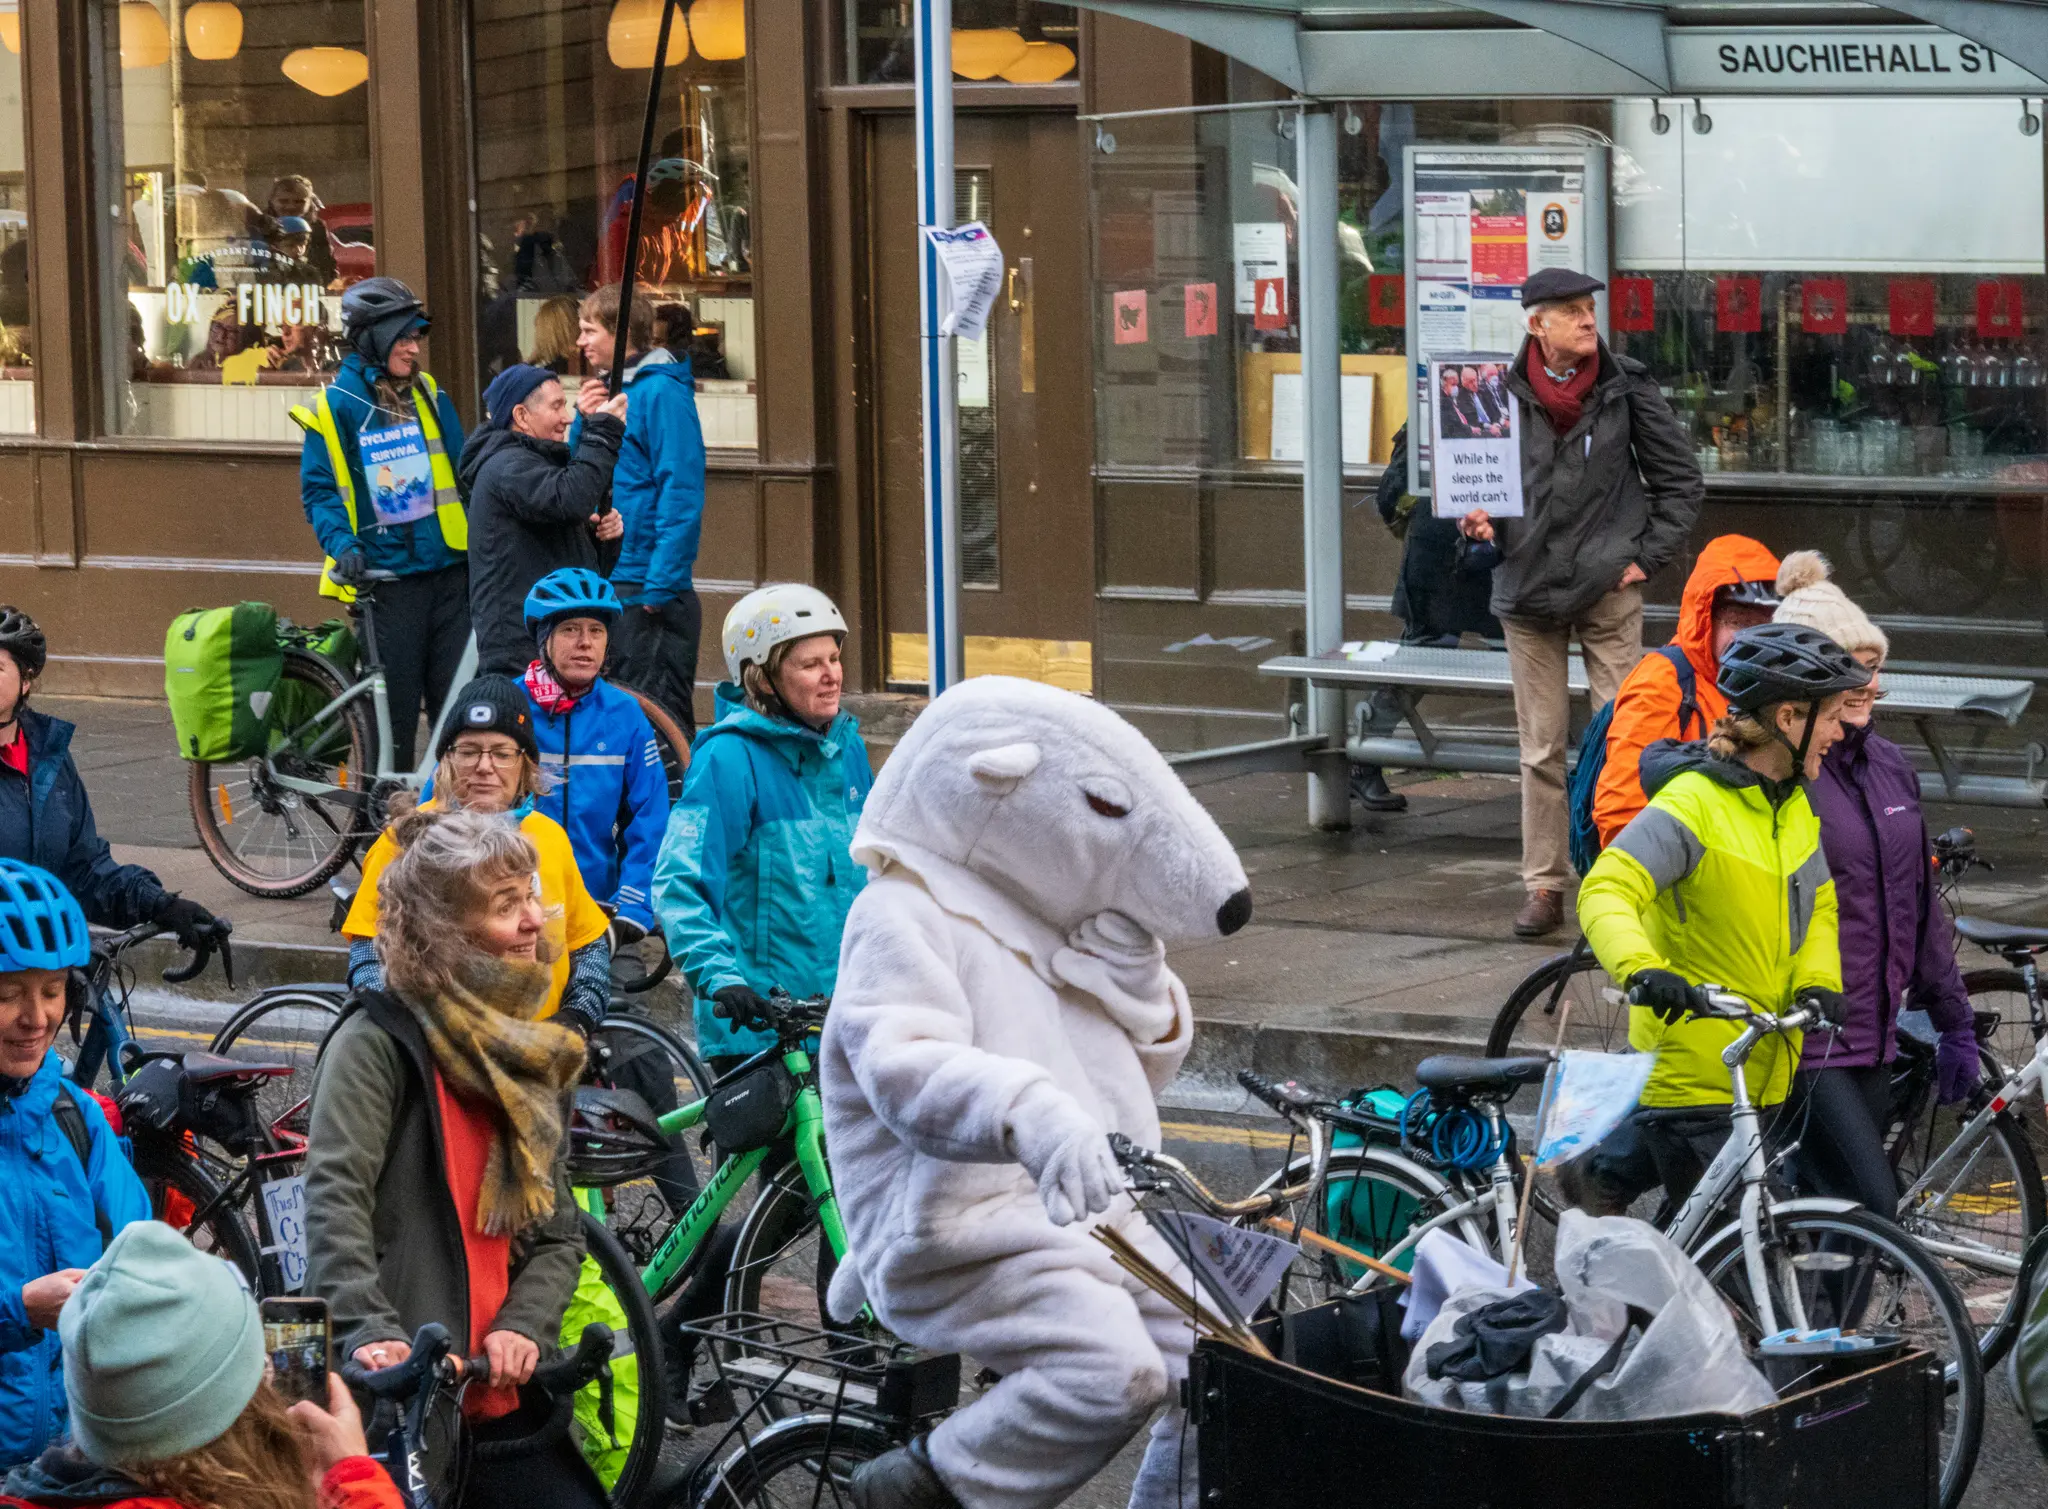 polar bear costume on protestor